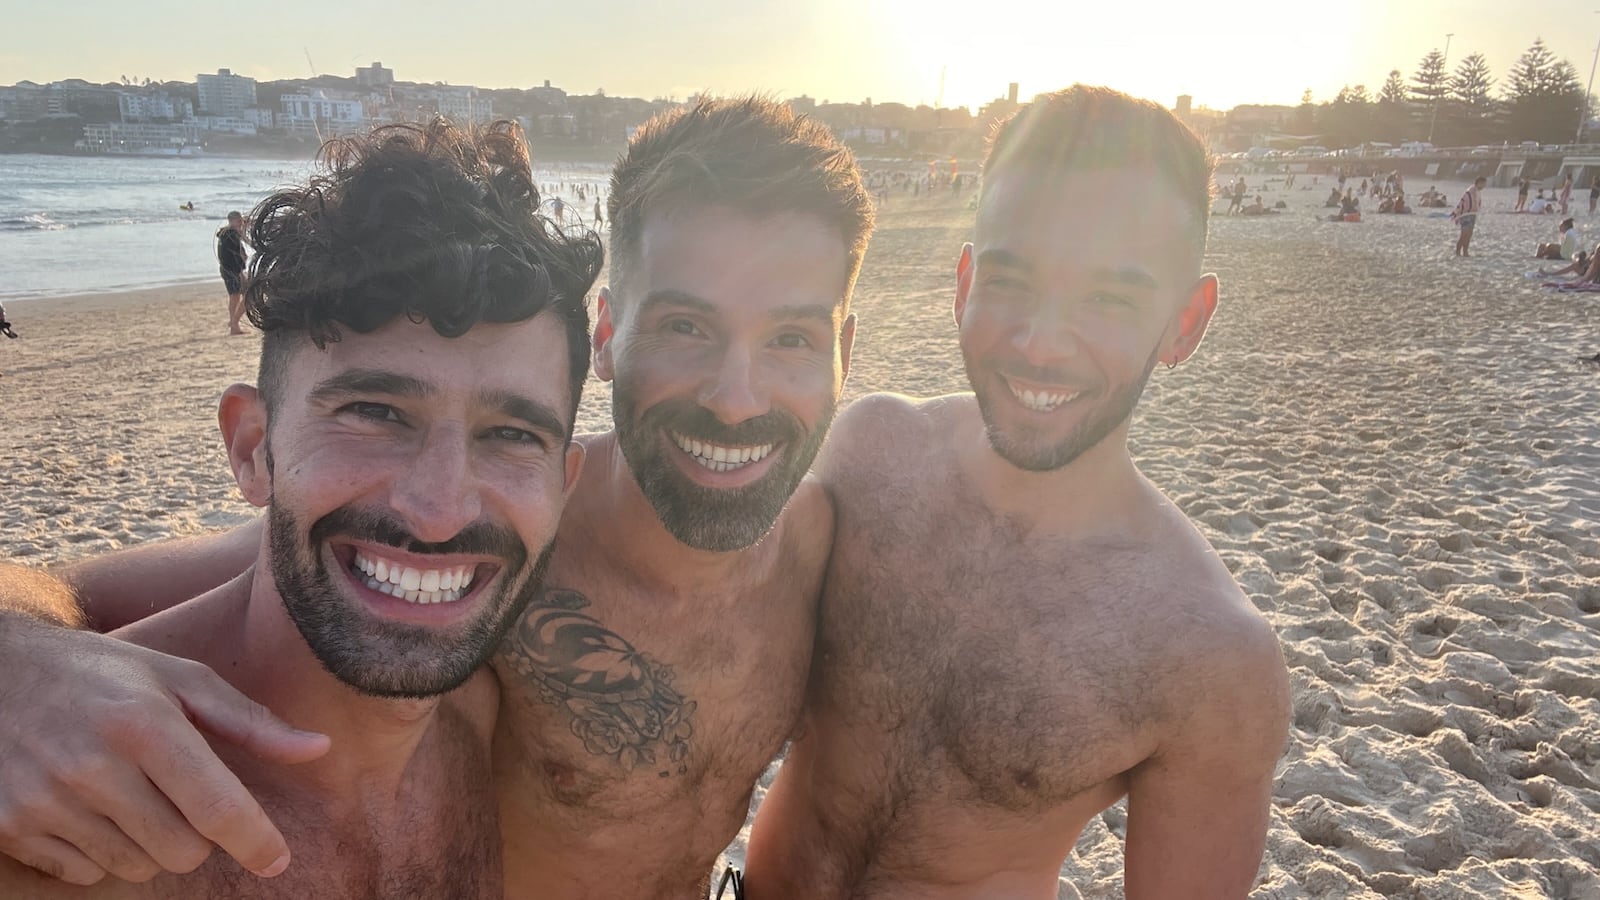 Beach selfie with friends in Sydney.